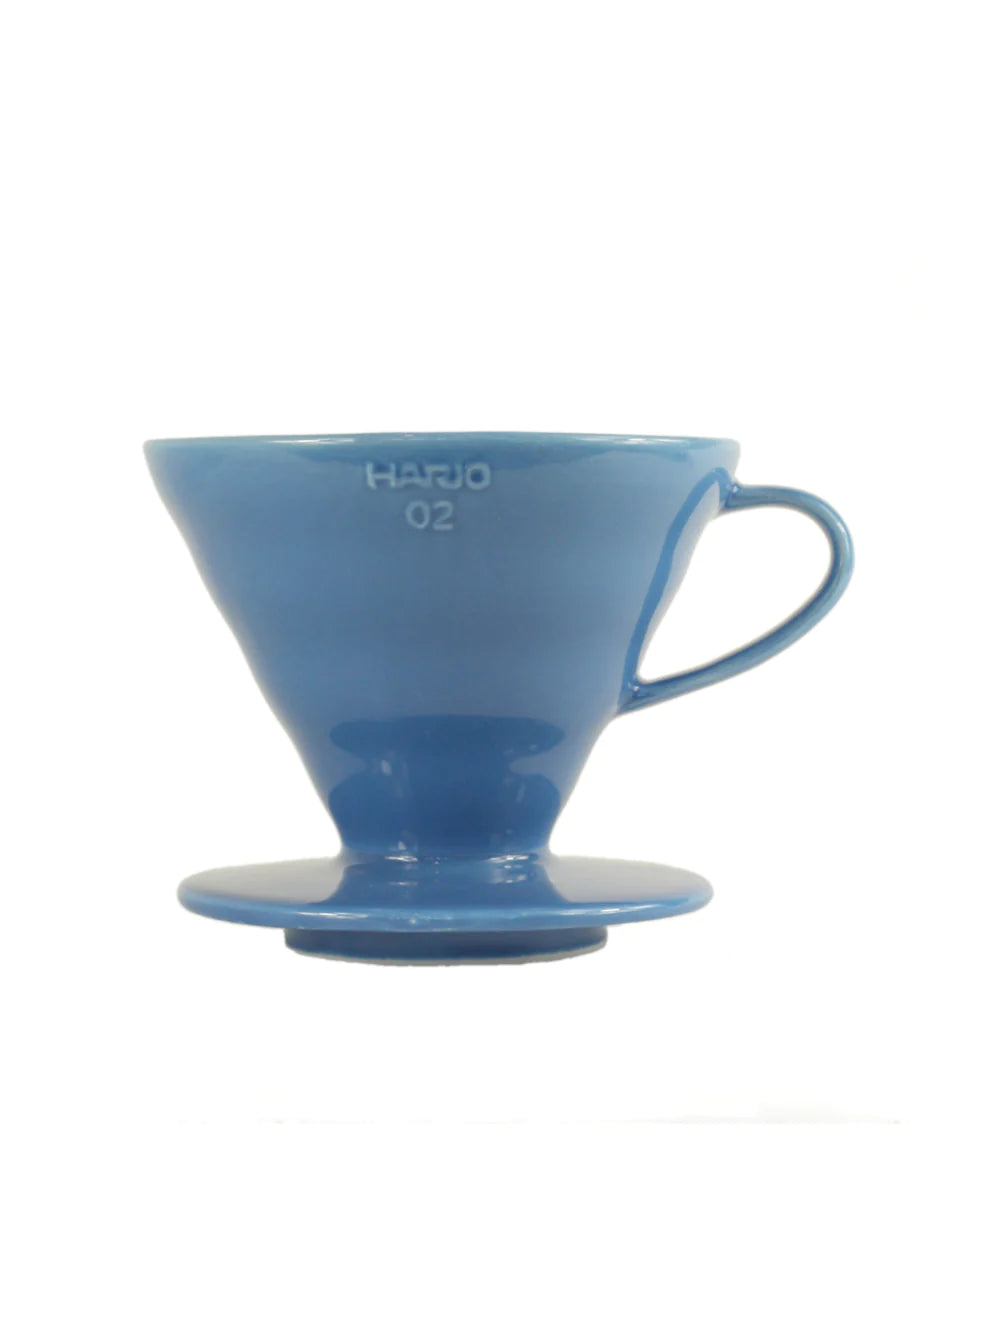 HARIO V60-02 Dripper (Céramique) - Bleu turquoise